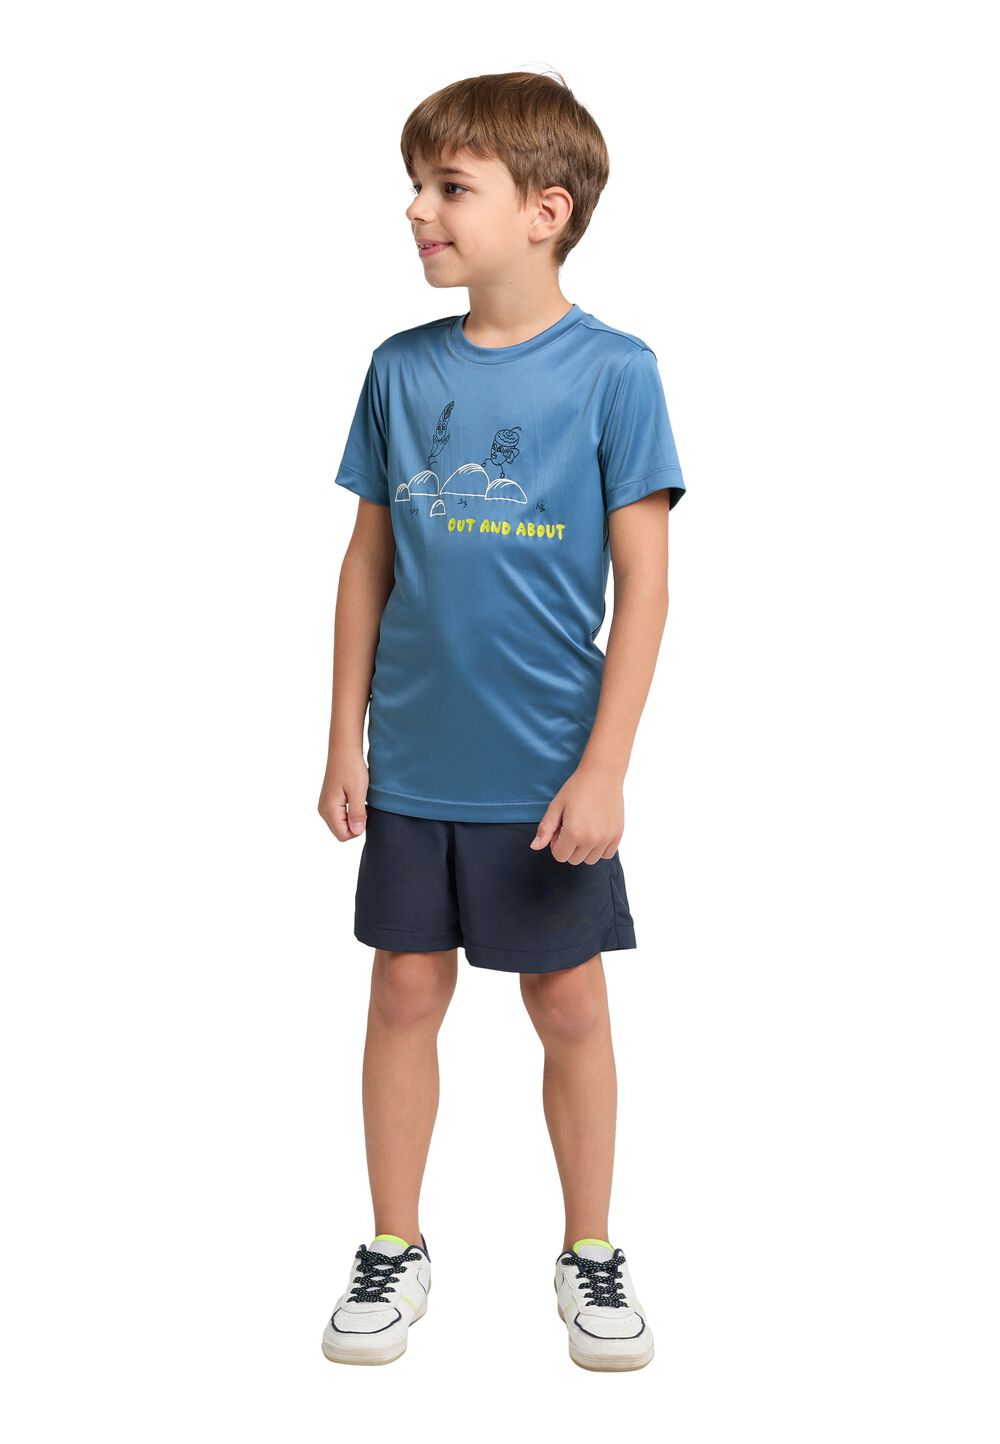 Jack Wolfskin OUT AND About T-Shirt Kids Functioneel shirt Kinderen 140 elemental blue elemental blue